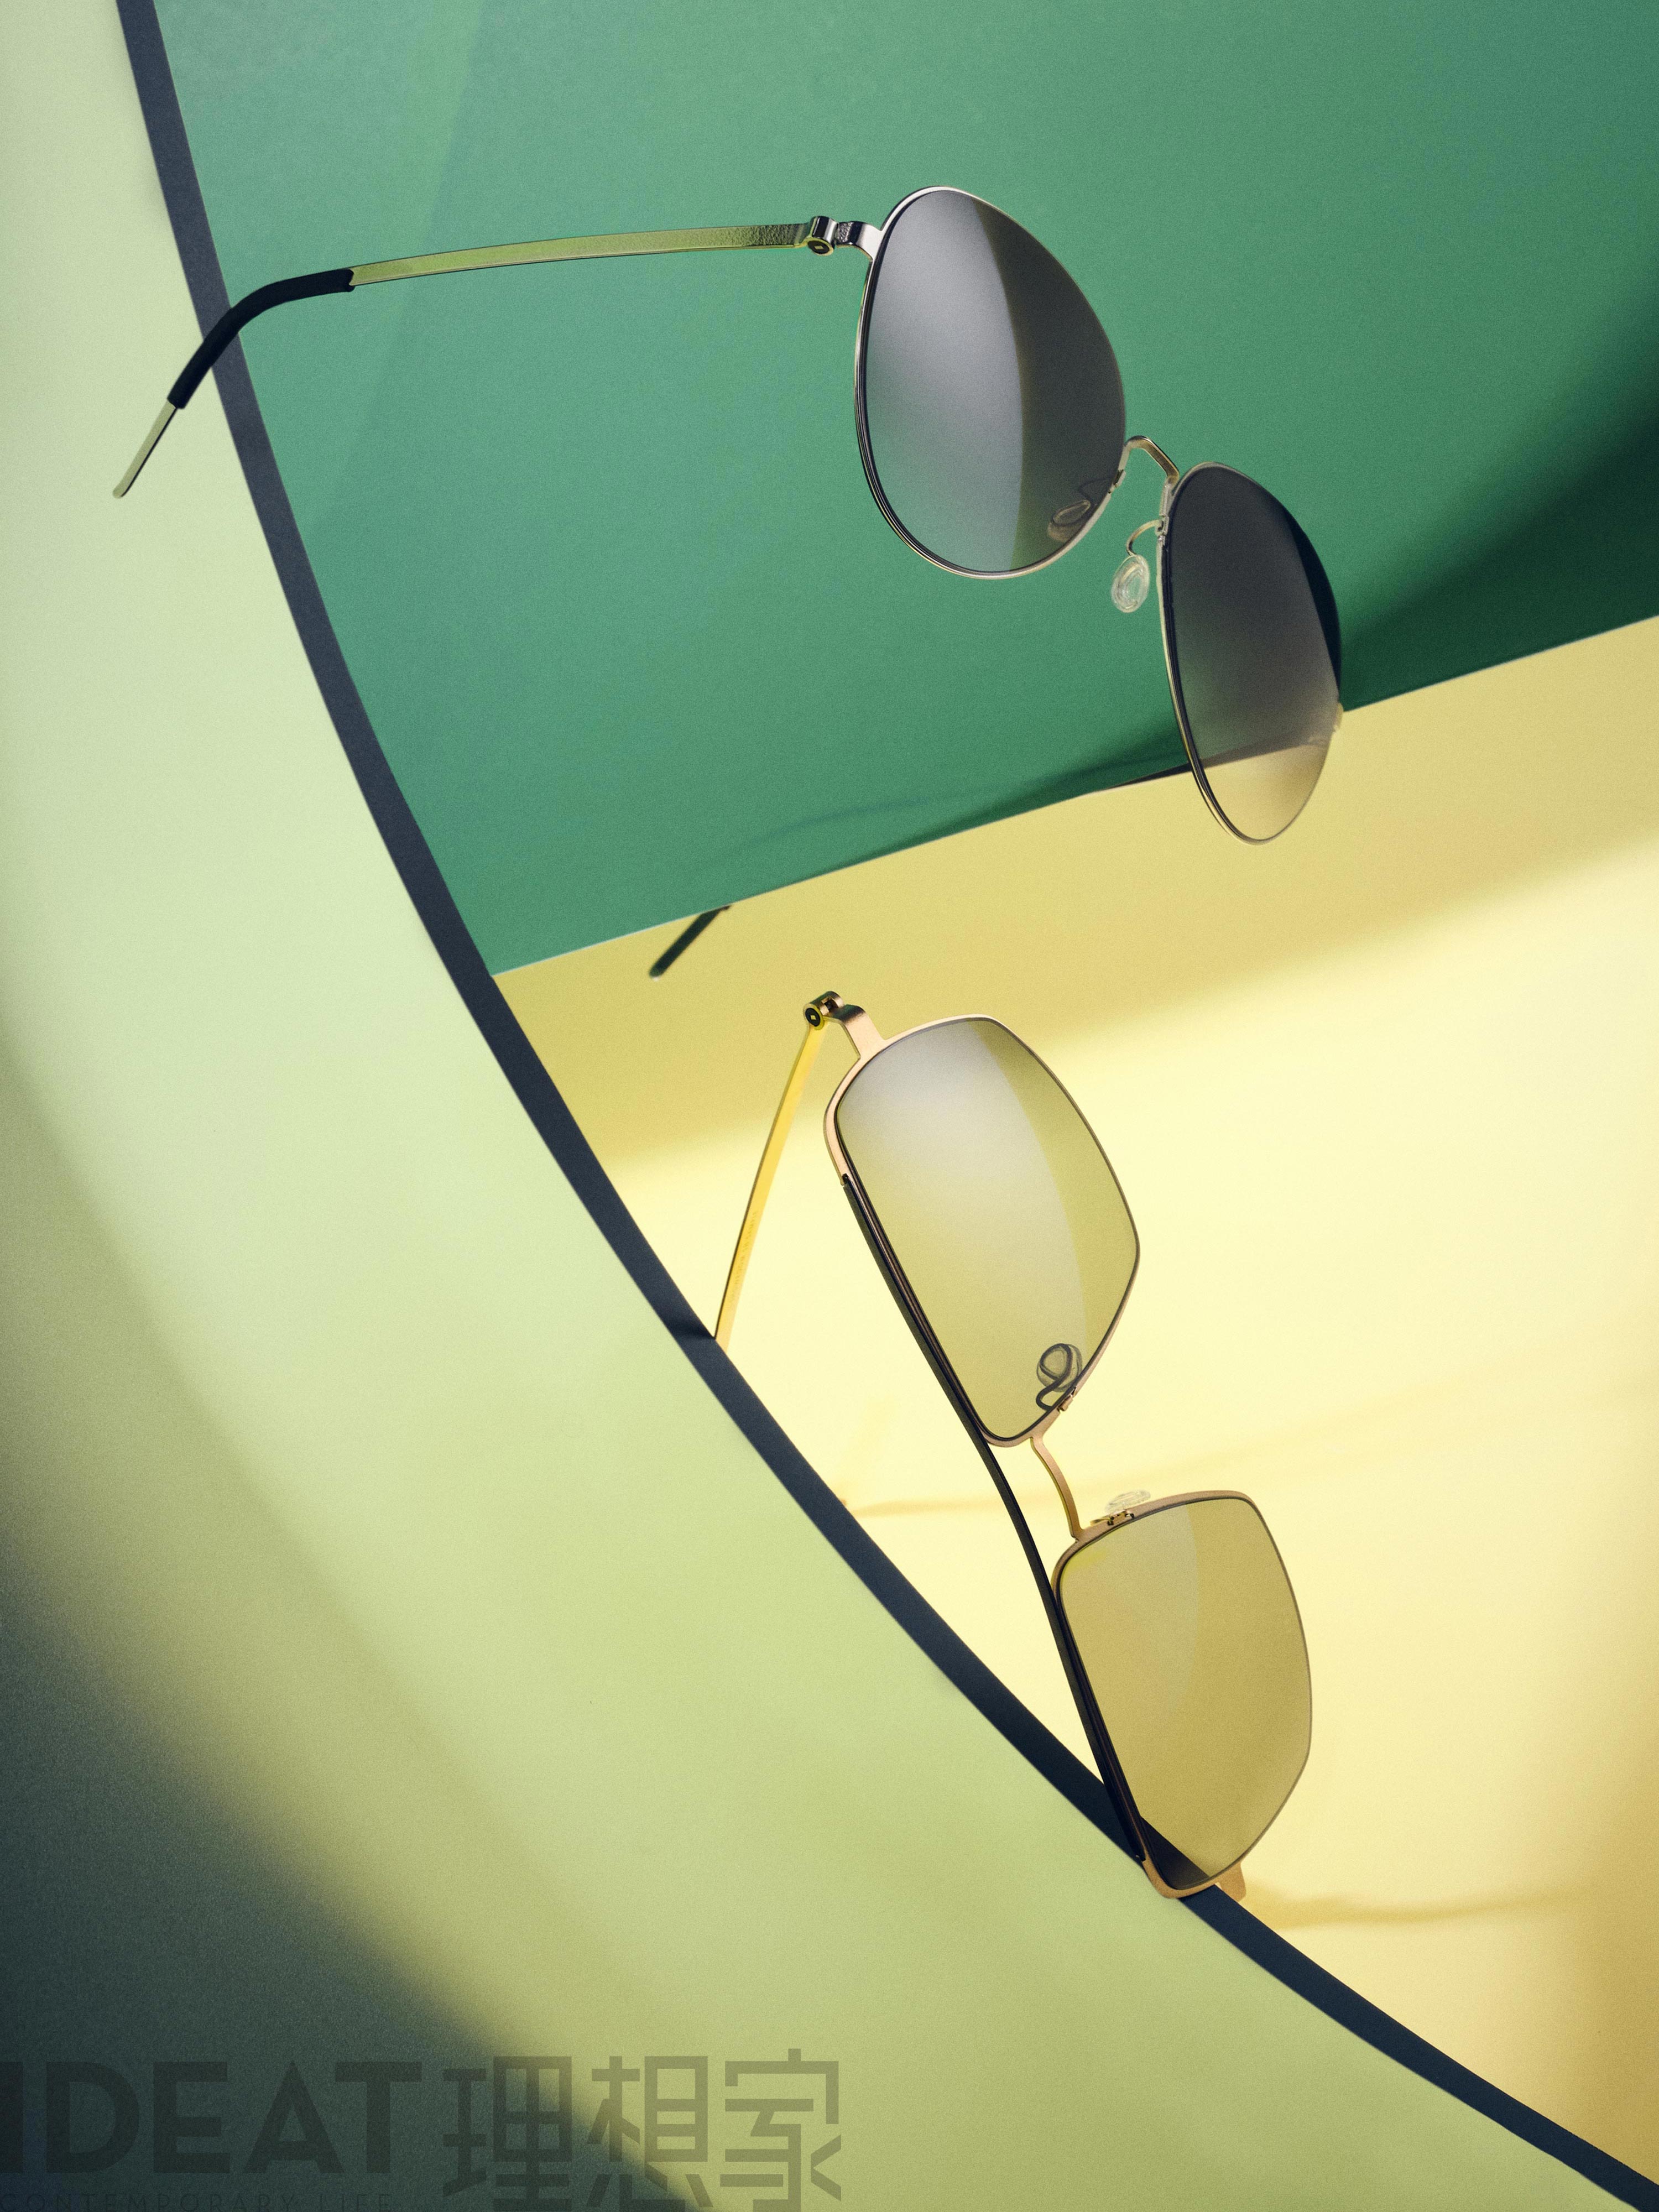 IDEAT杂志介绍 LINDBERG titanium sunglasses 型号8908 和8909